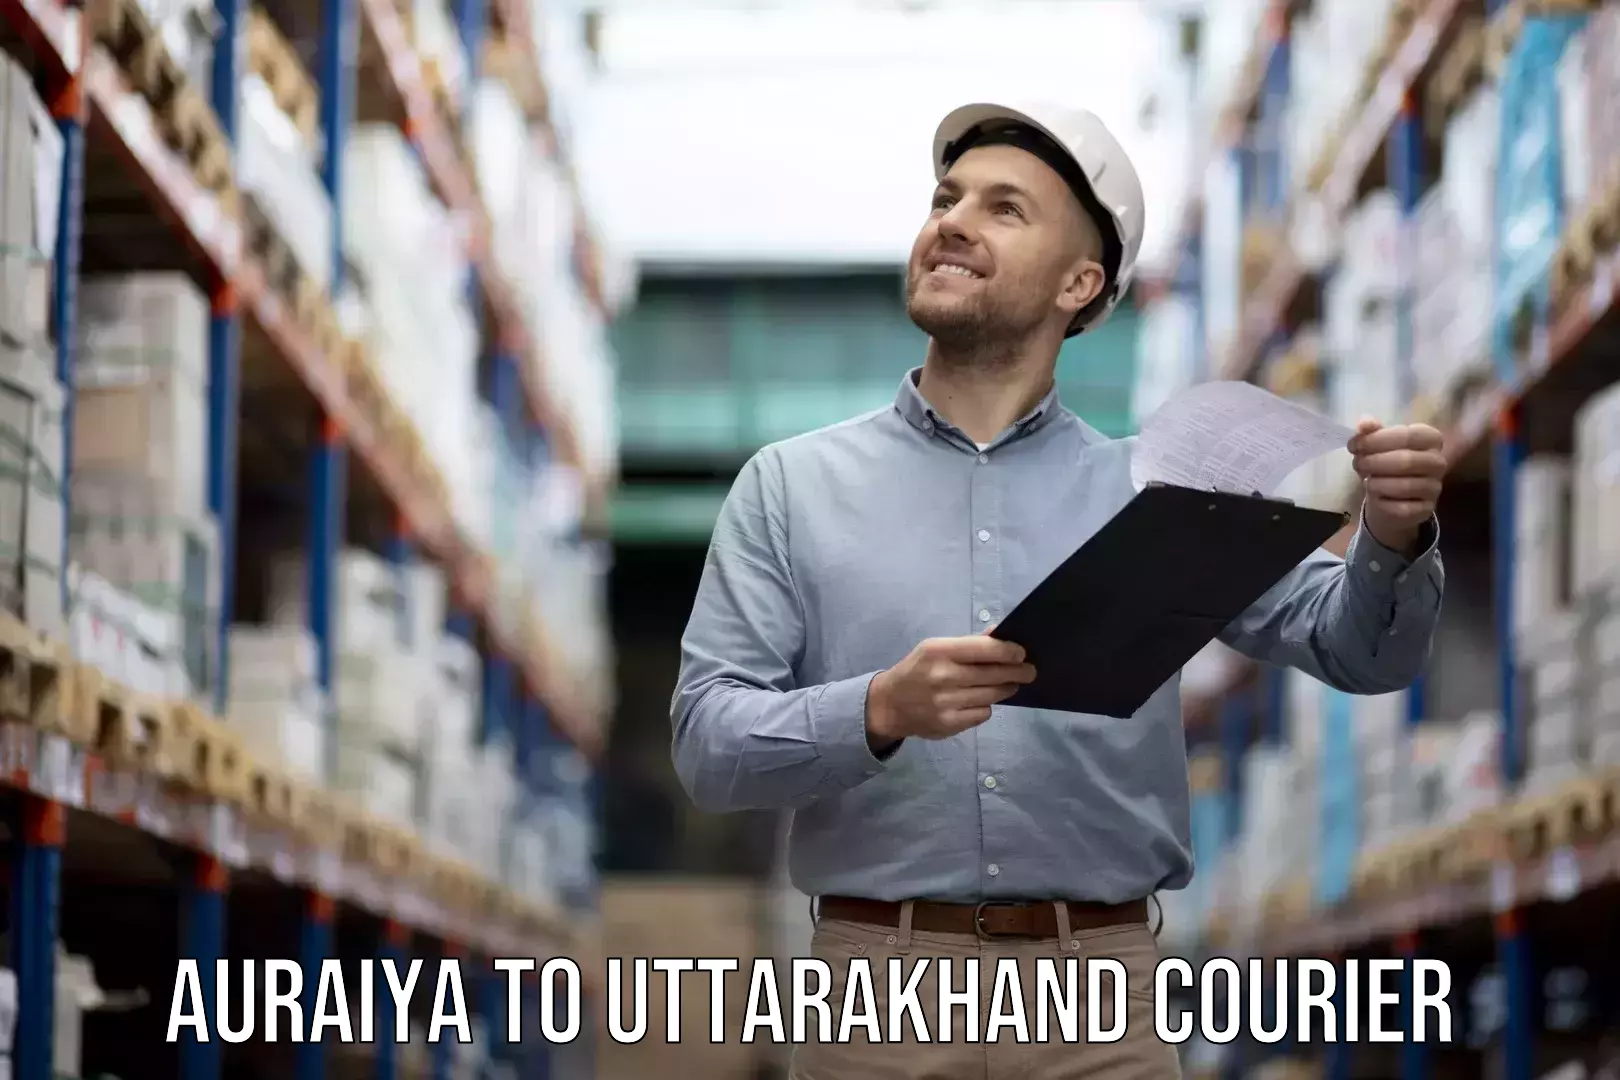 Professional moving company Auraiya to Rudrapur